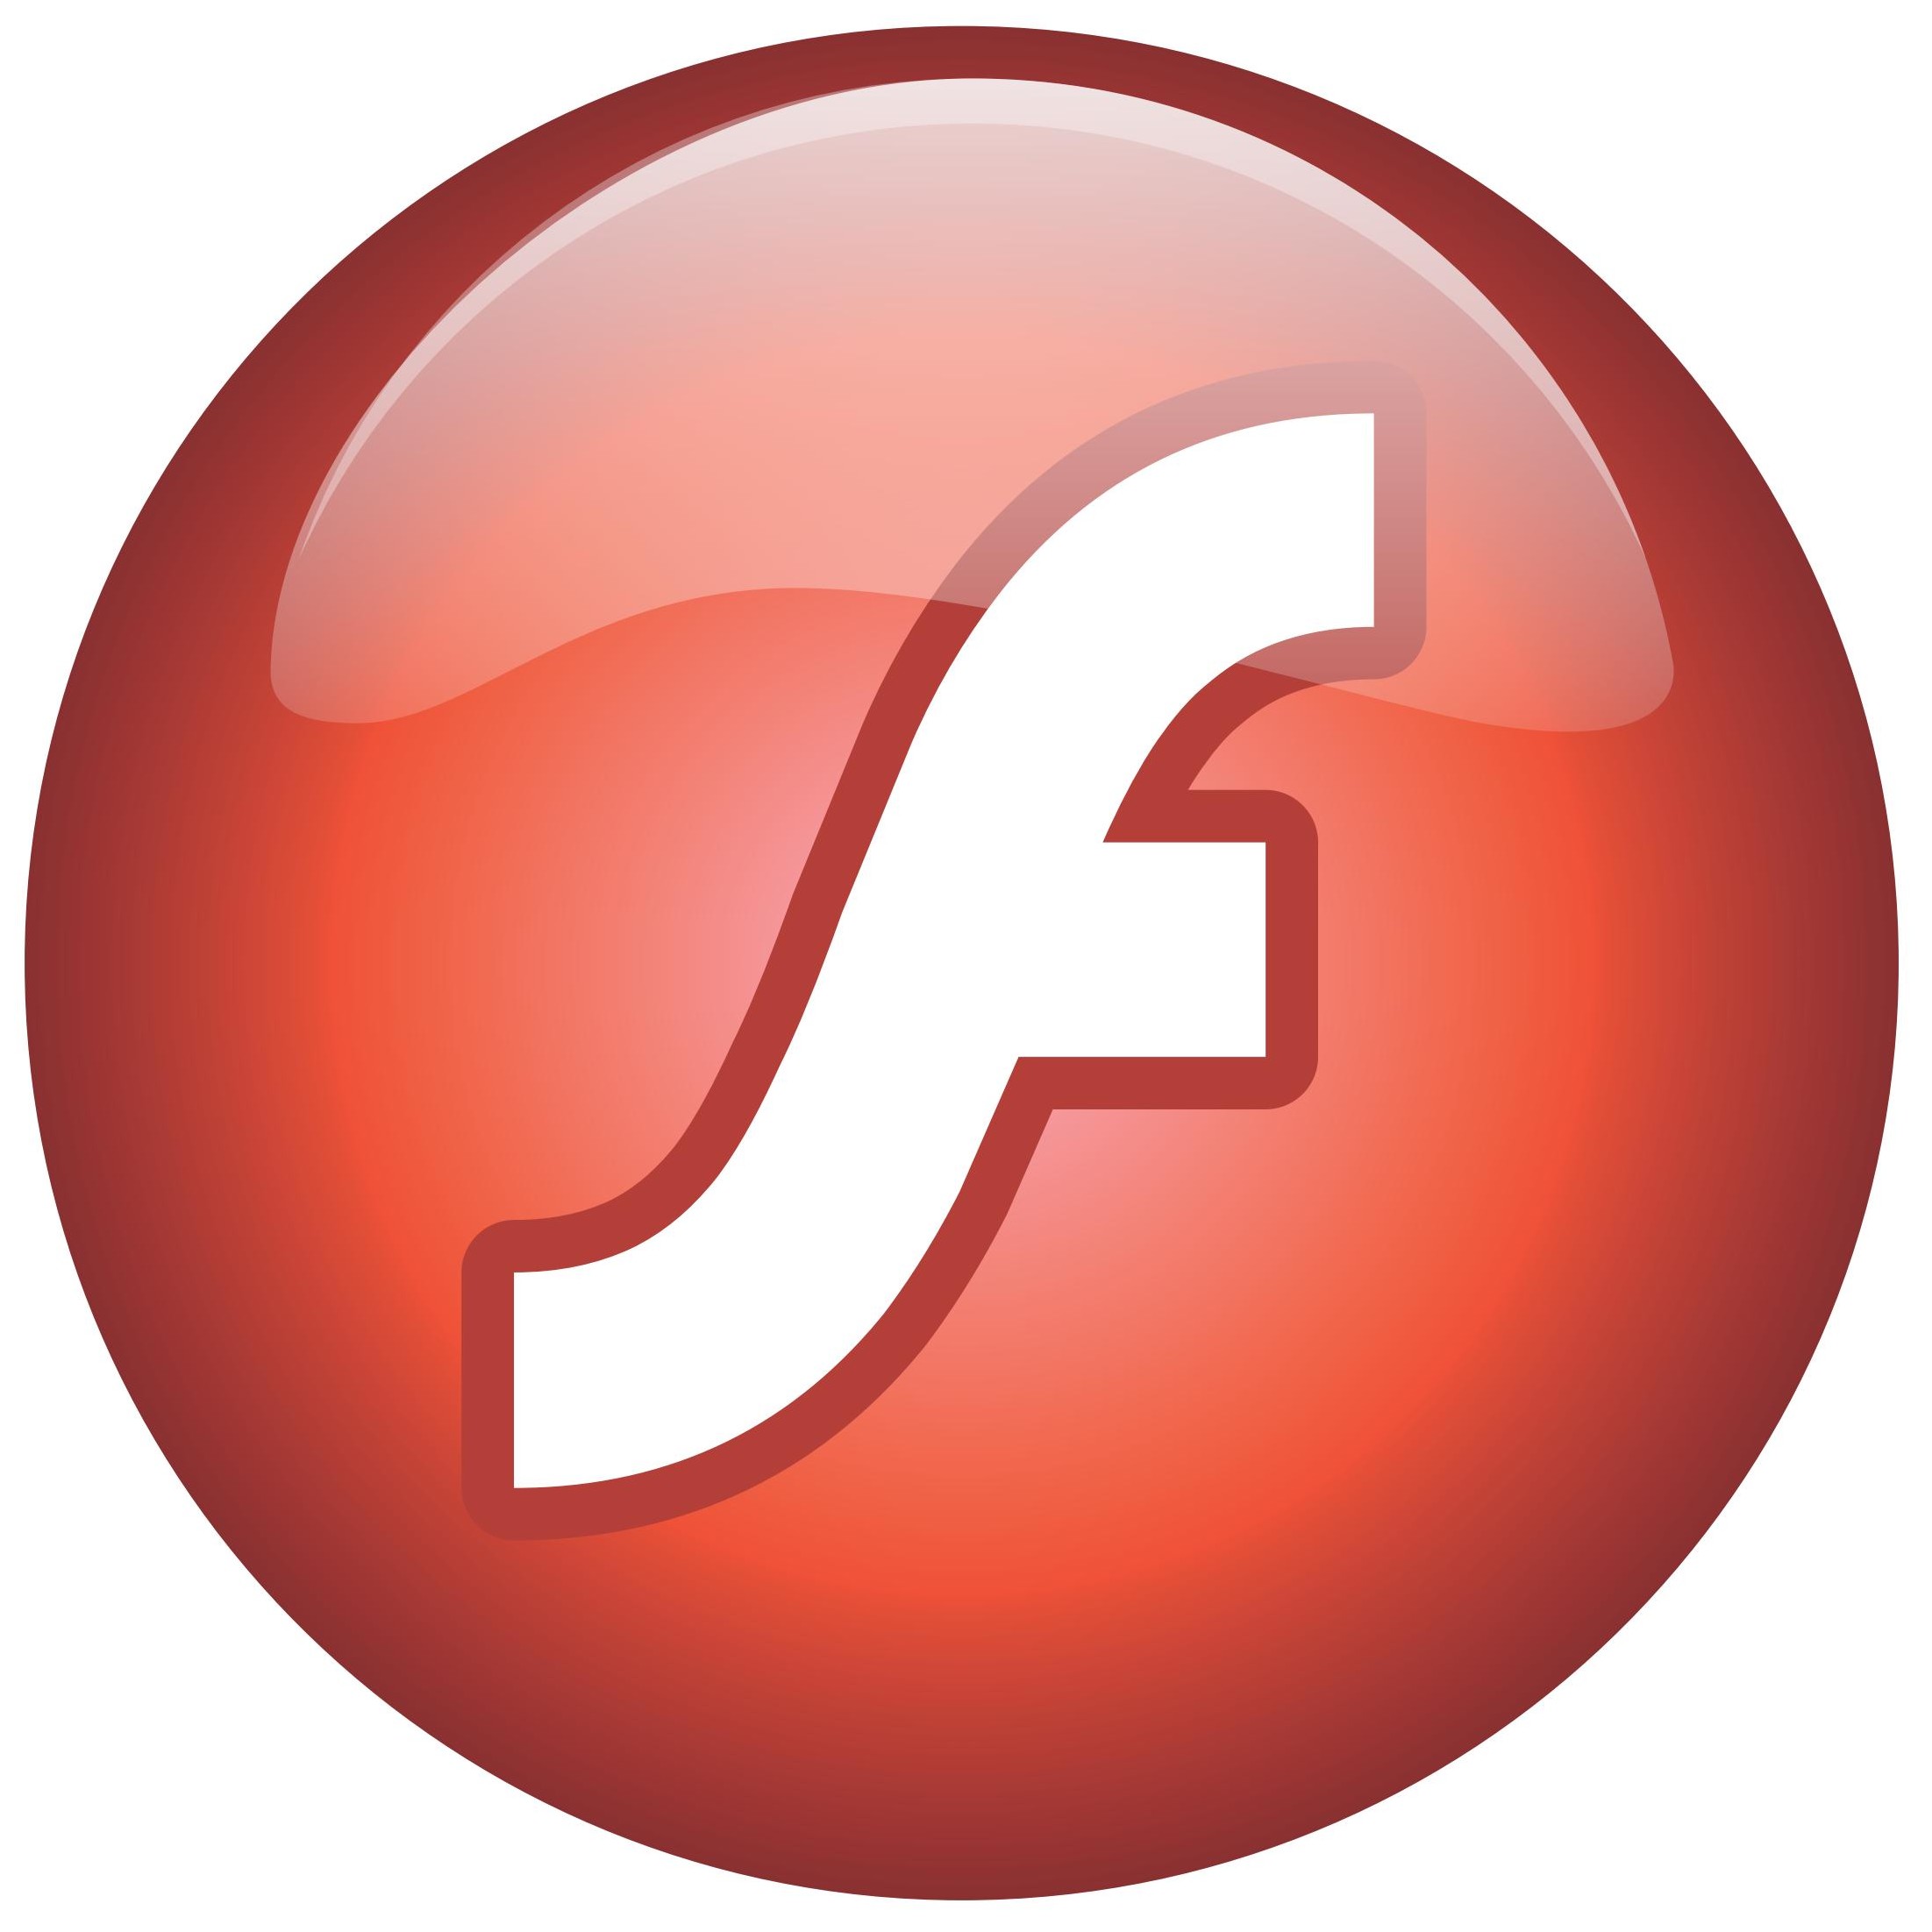 Adobe Flash Logo [EPS File] Vector EPS Free Download, Logo, Icons 